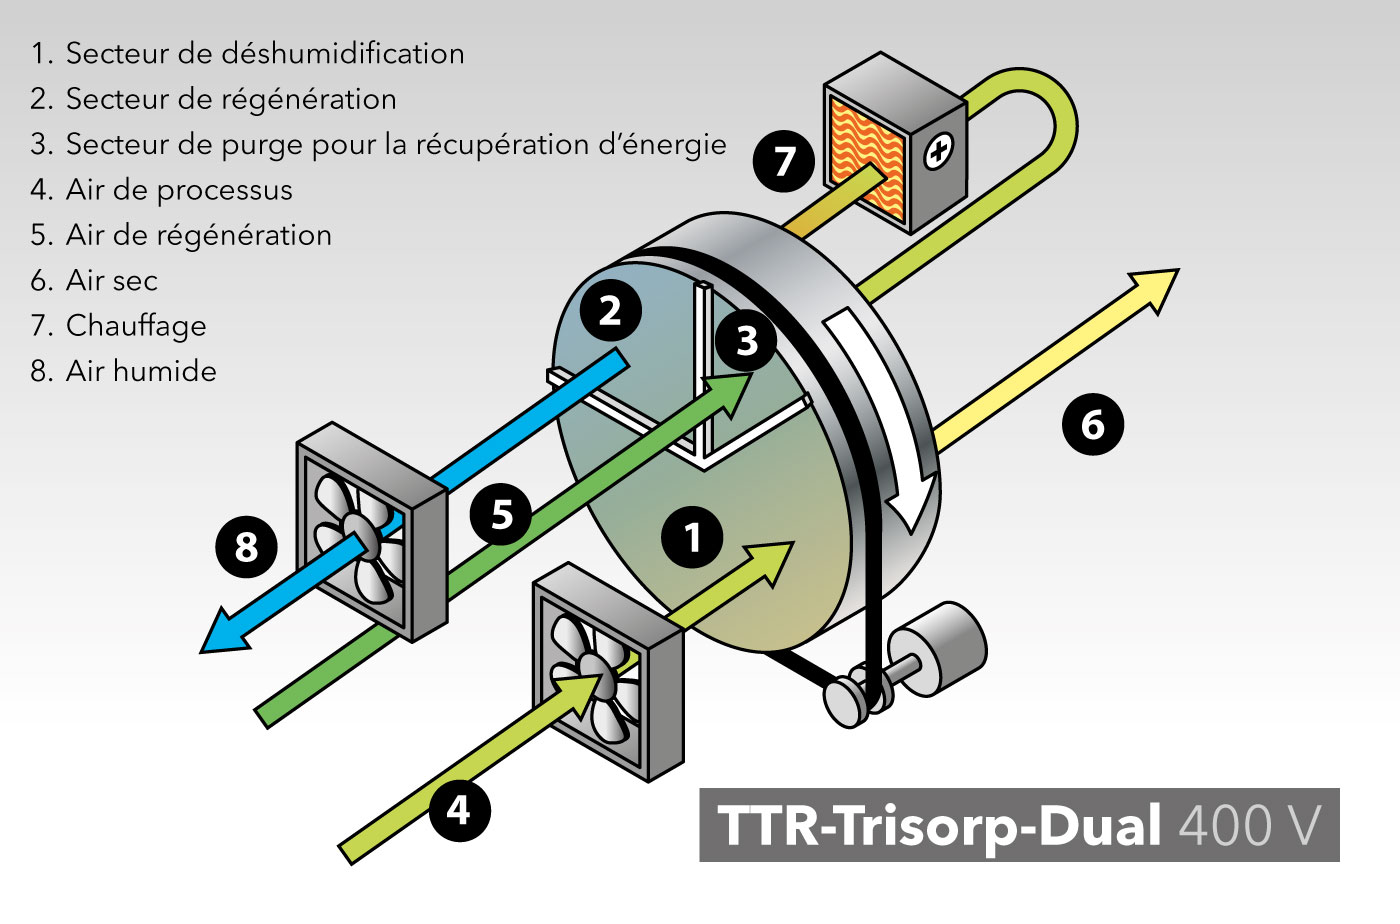 TTR Trisorp-Dual